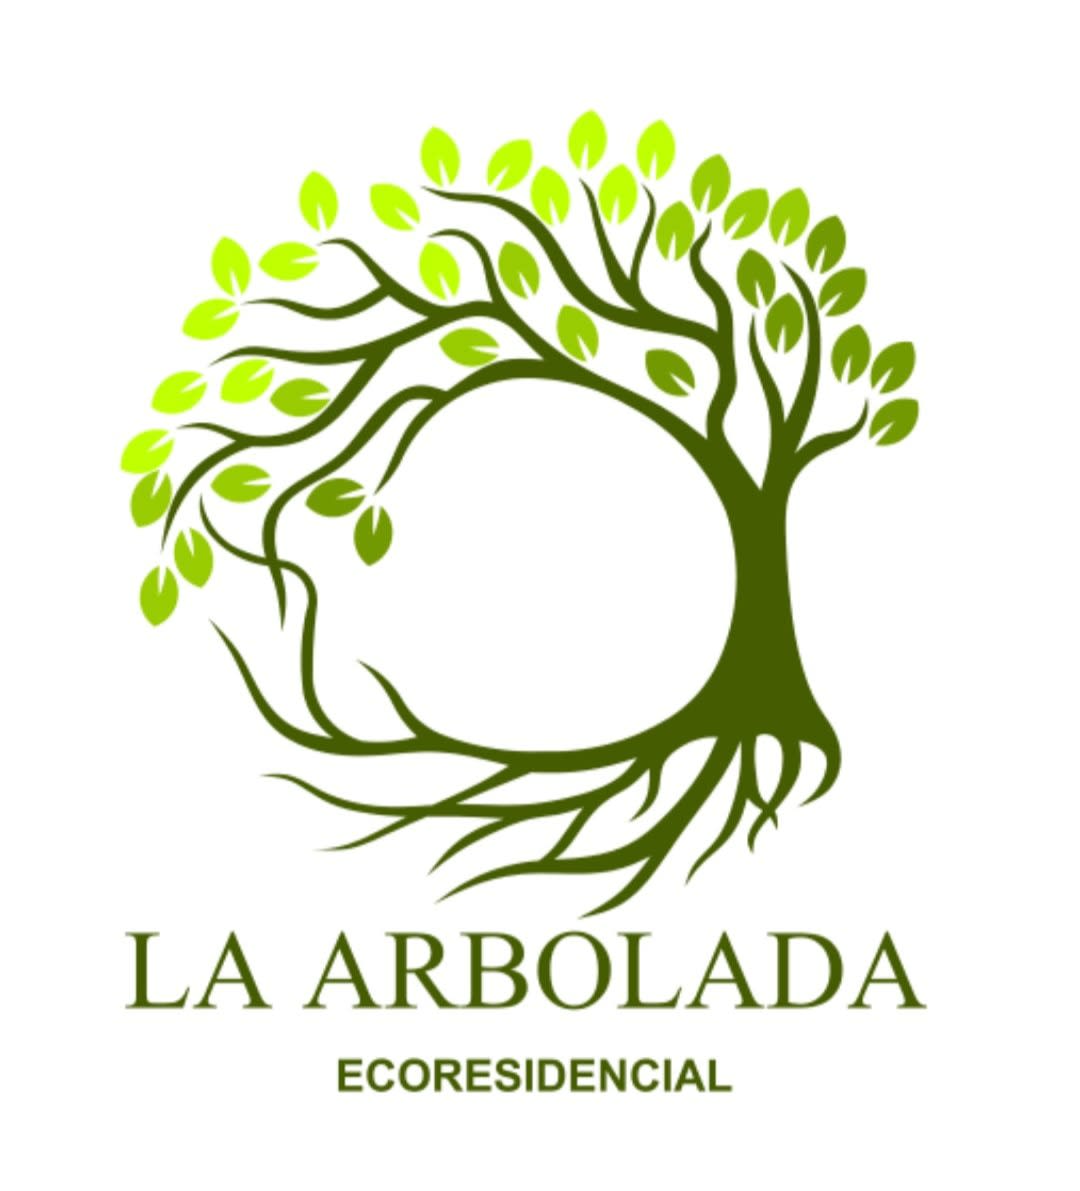 La Arbolada